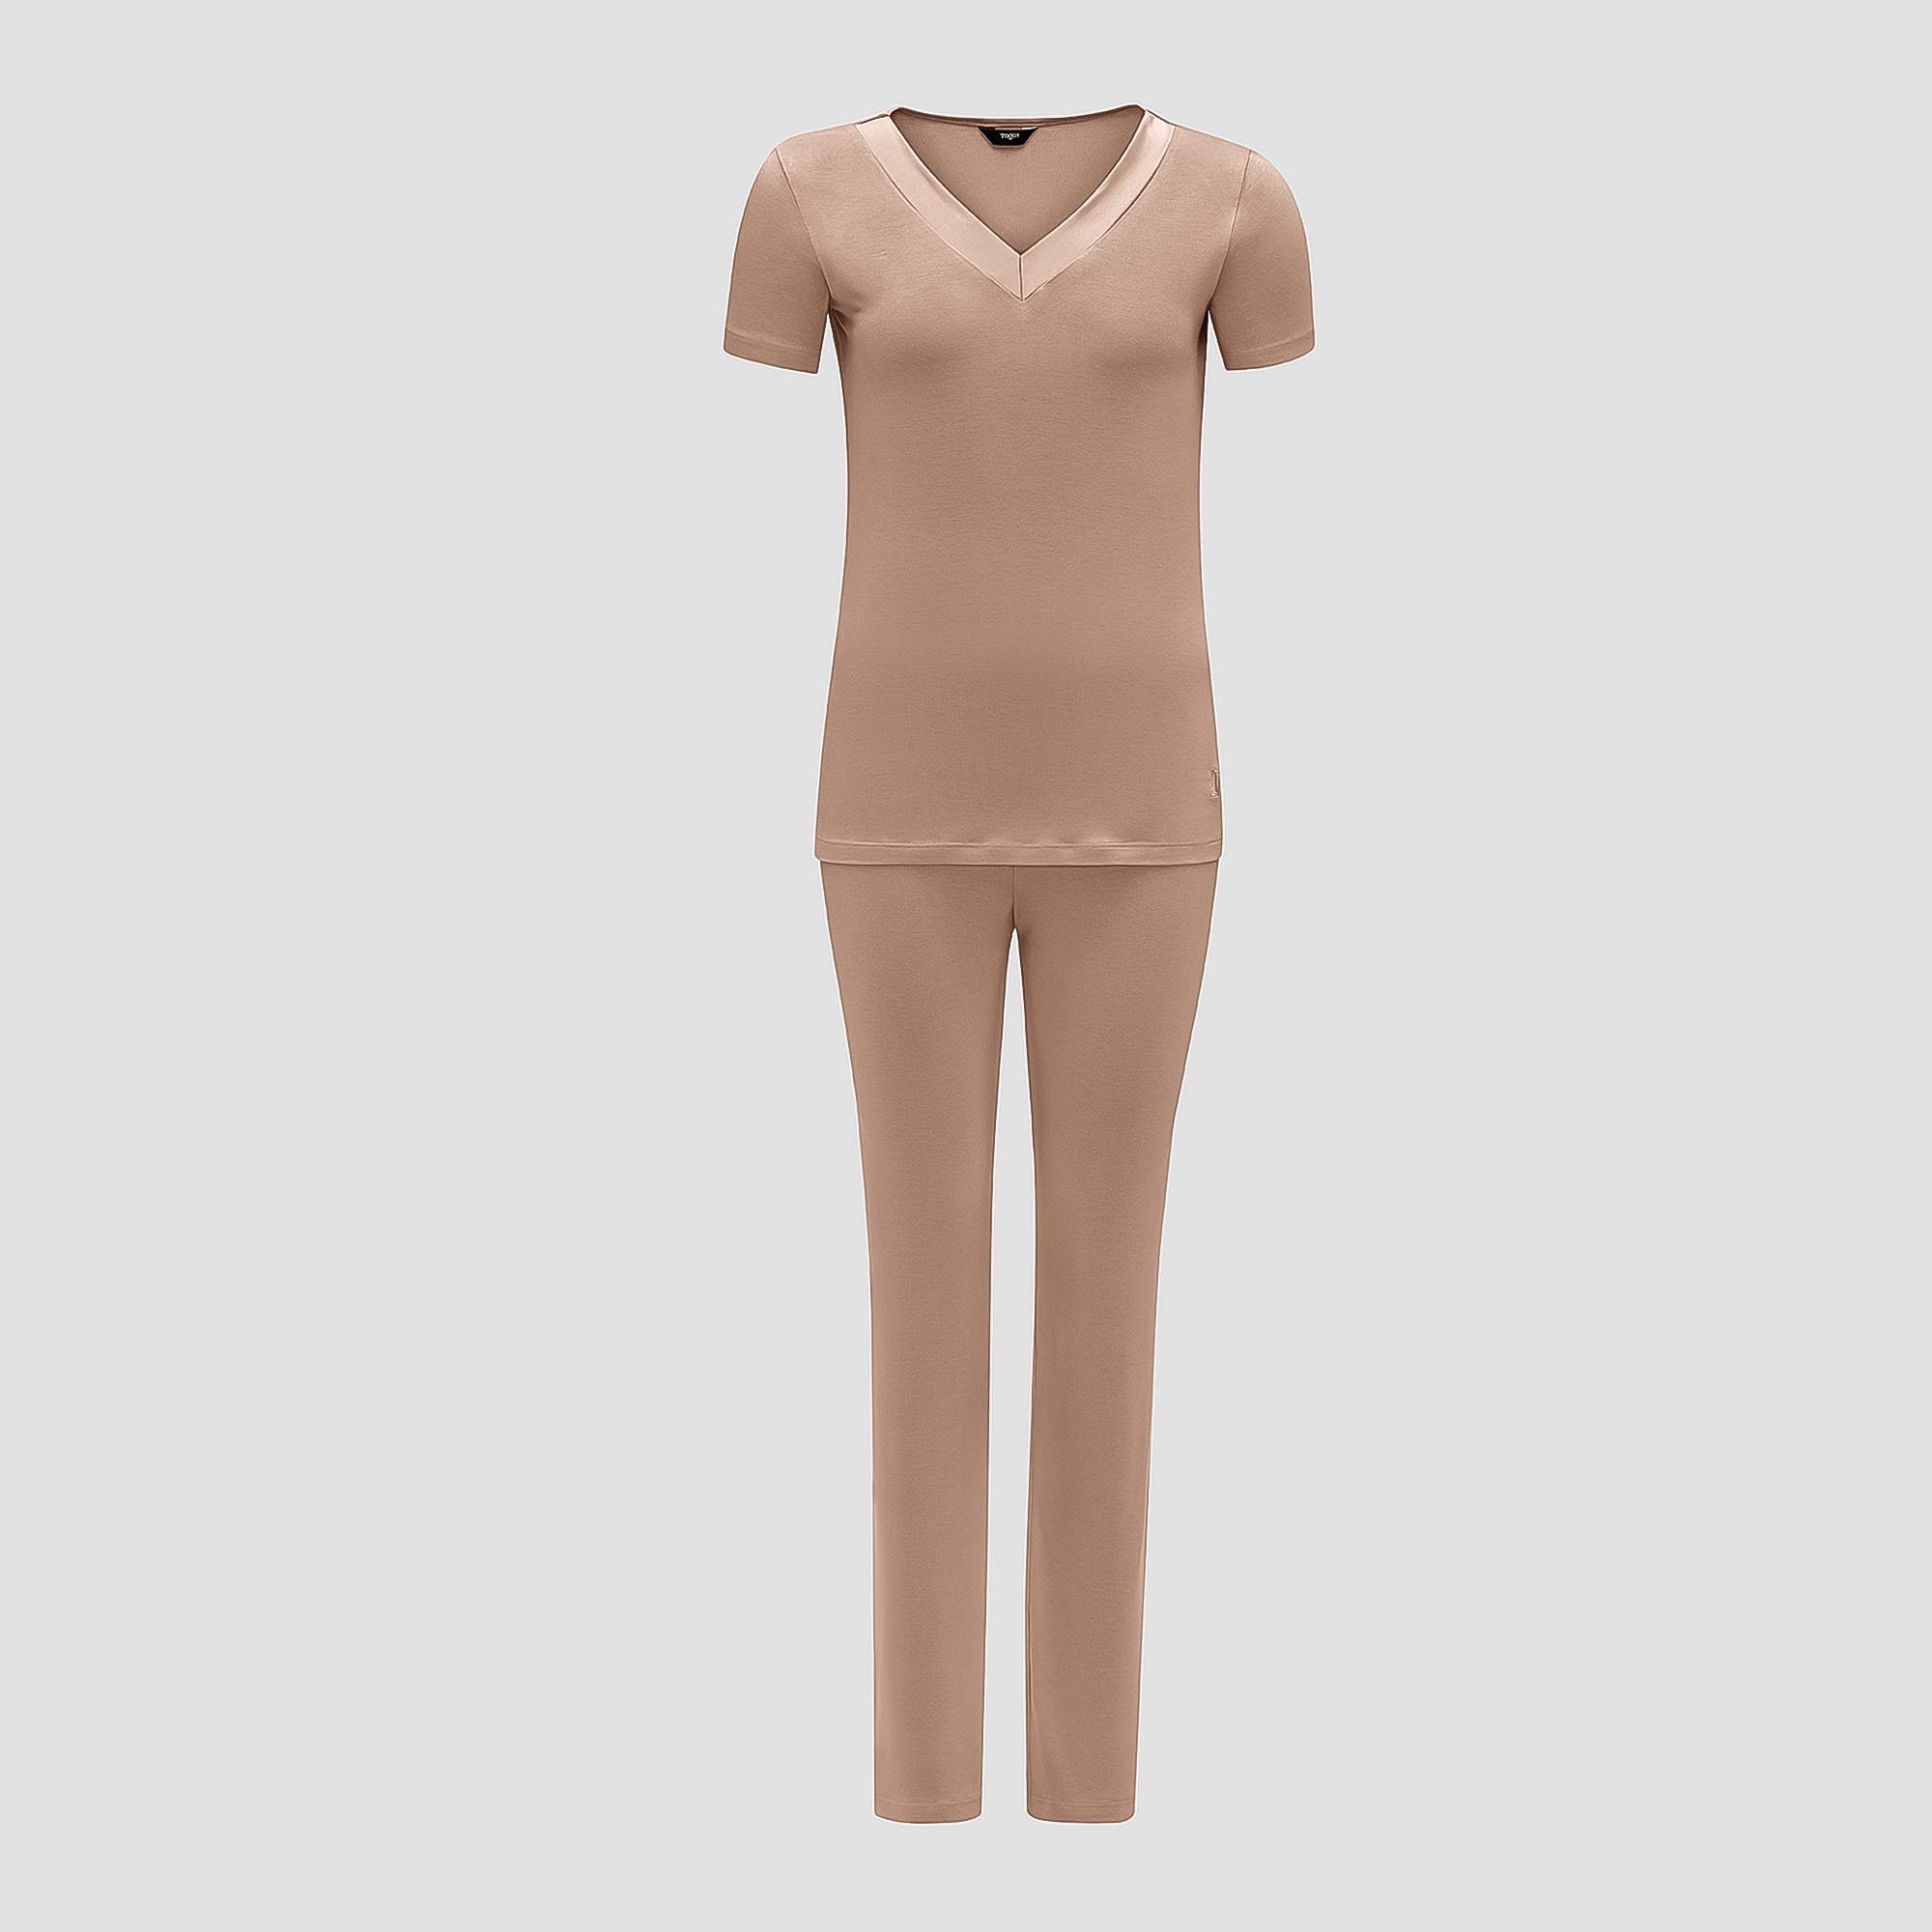 Пижама Togas Ингелла розово-бежевая женская L(48) 2 предмета, цвет розовый, размер L(48)